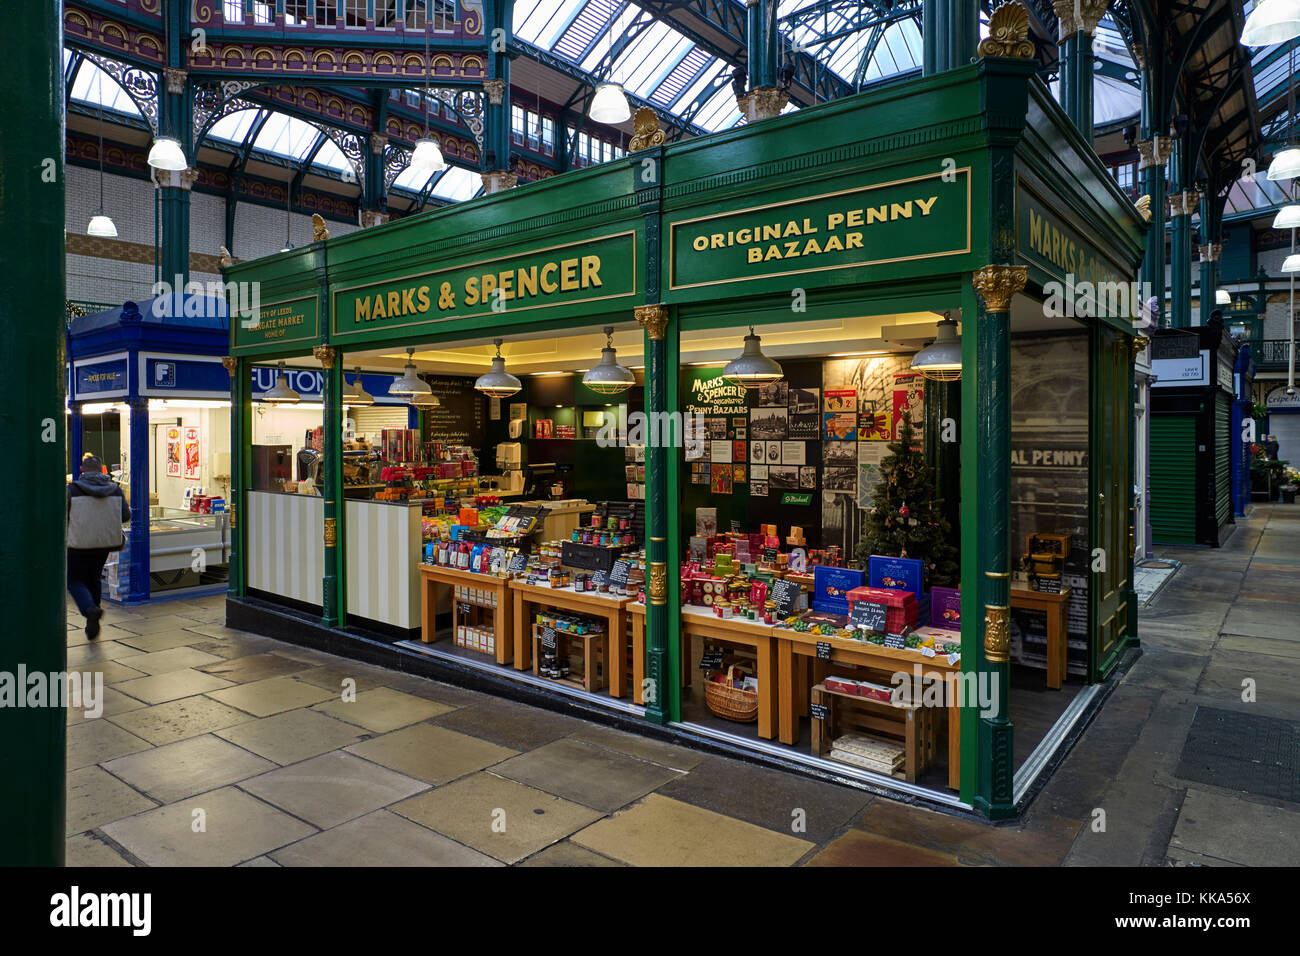 Marks & Spencer original penny bazaar in Kirkdale market, Leeds Stock Photo